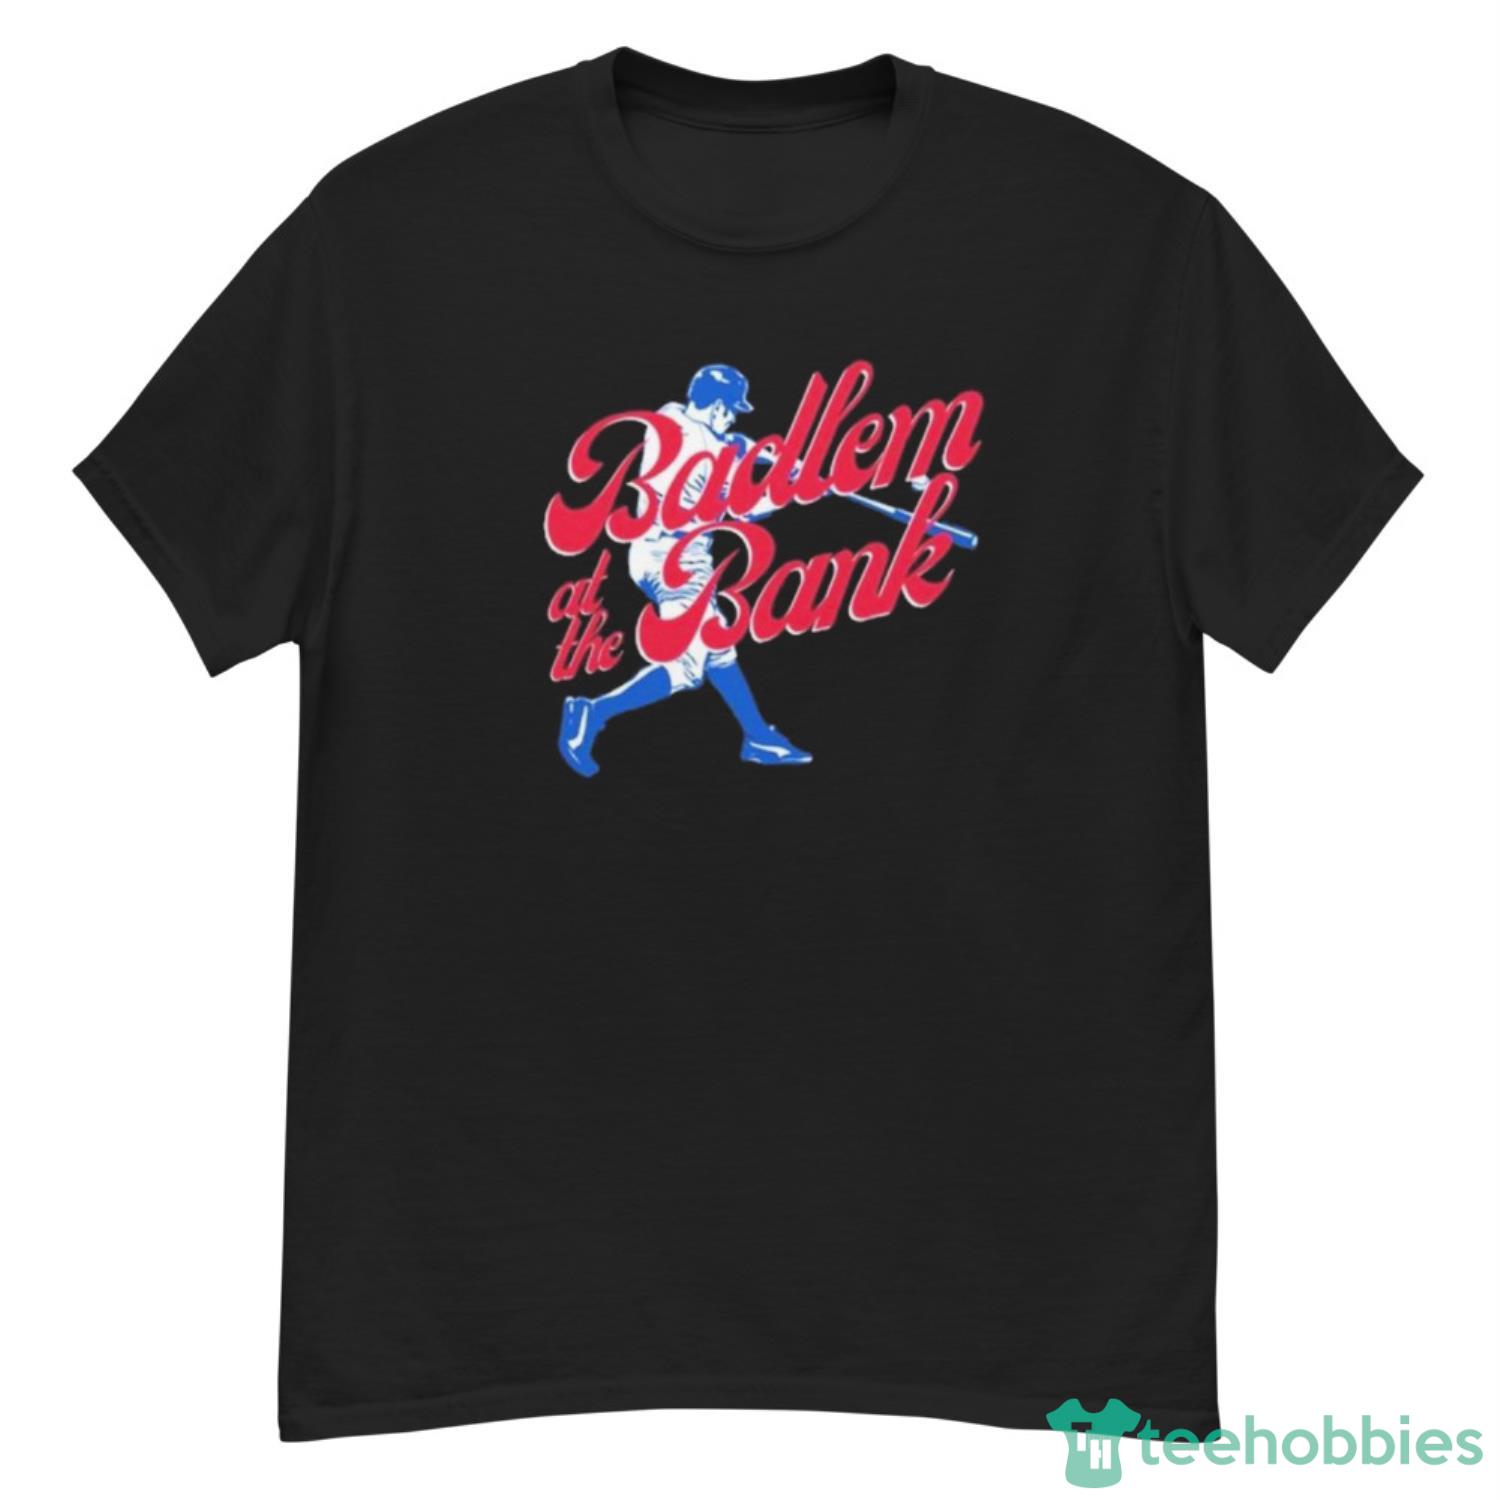 Philly Bedlam At The Bank Philadelphia Phillies Baseball T-Shirt - G500 Men’s Classic T-Shirt